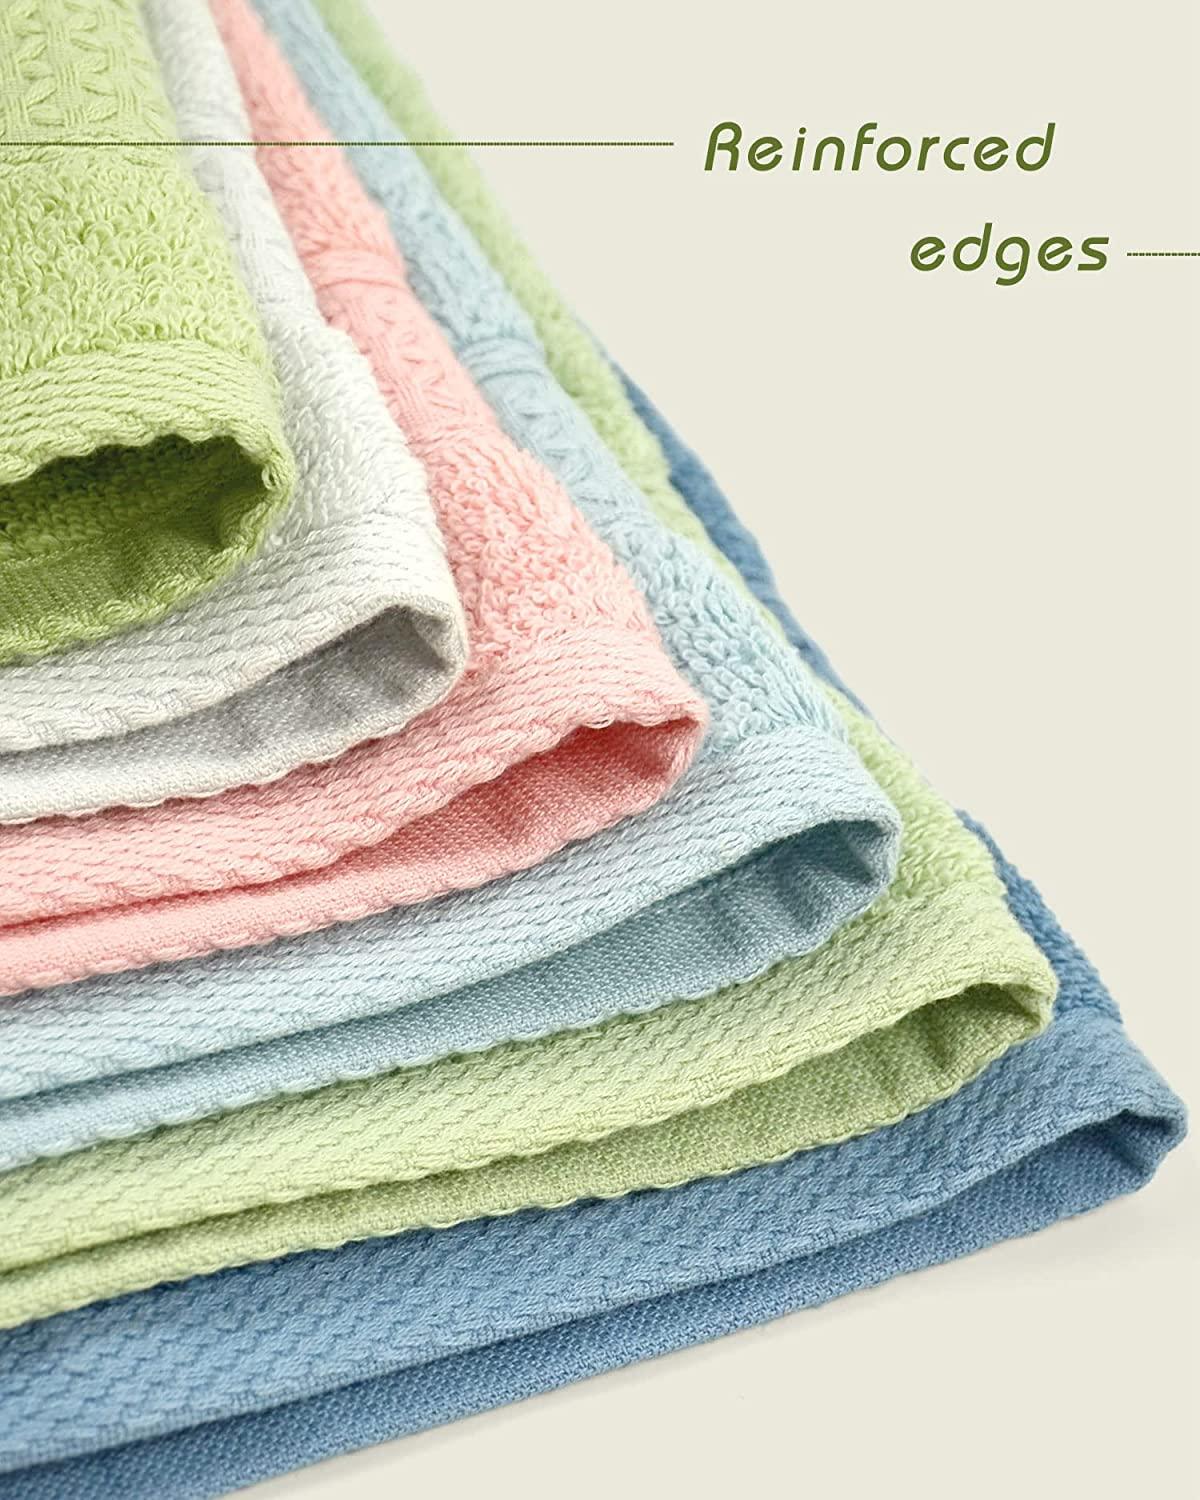  Cleanbear Cotton Hand Towel Set 6-Pack Ultra Soft Hand